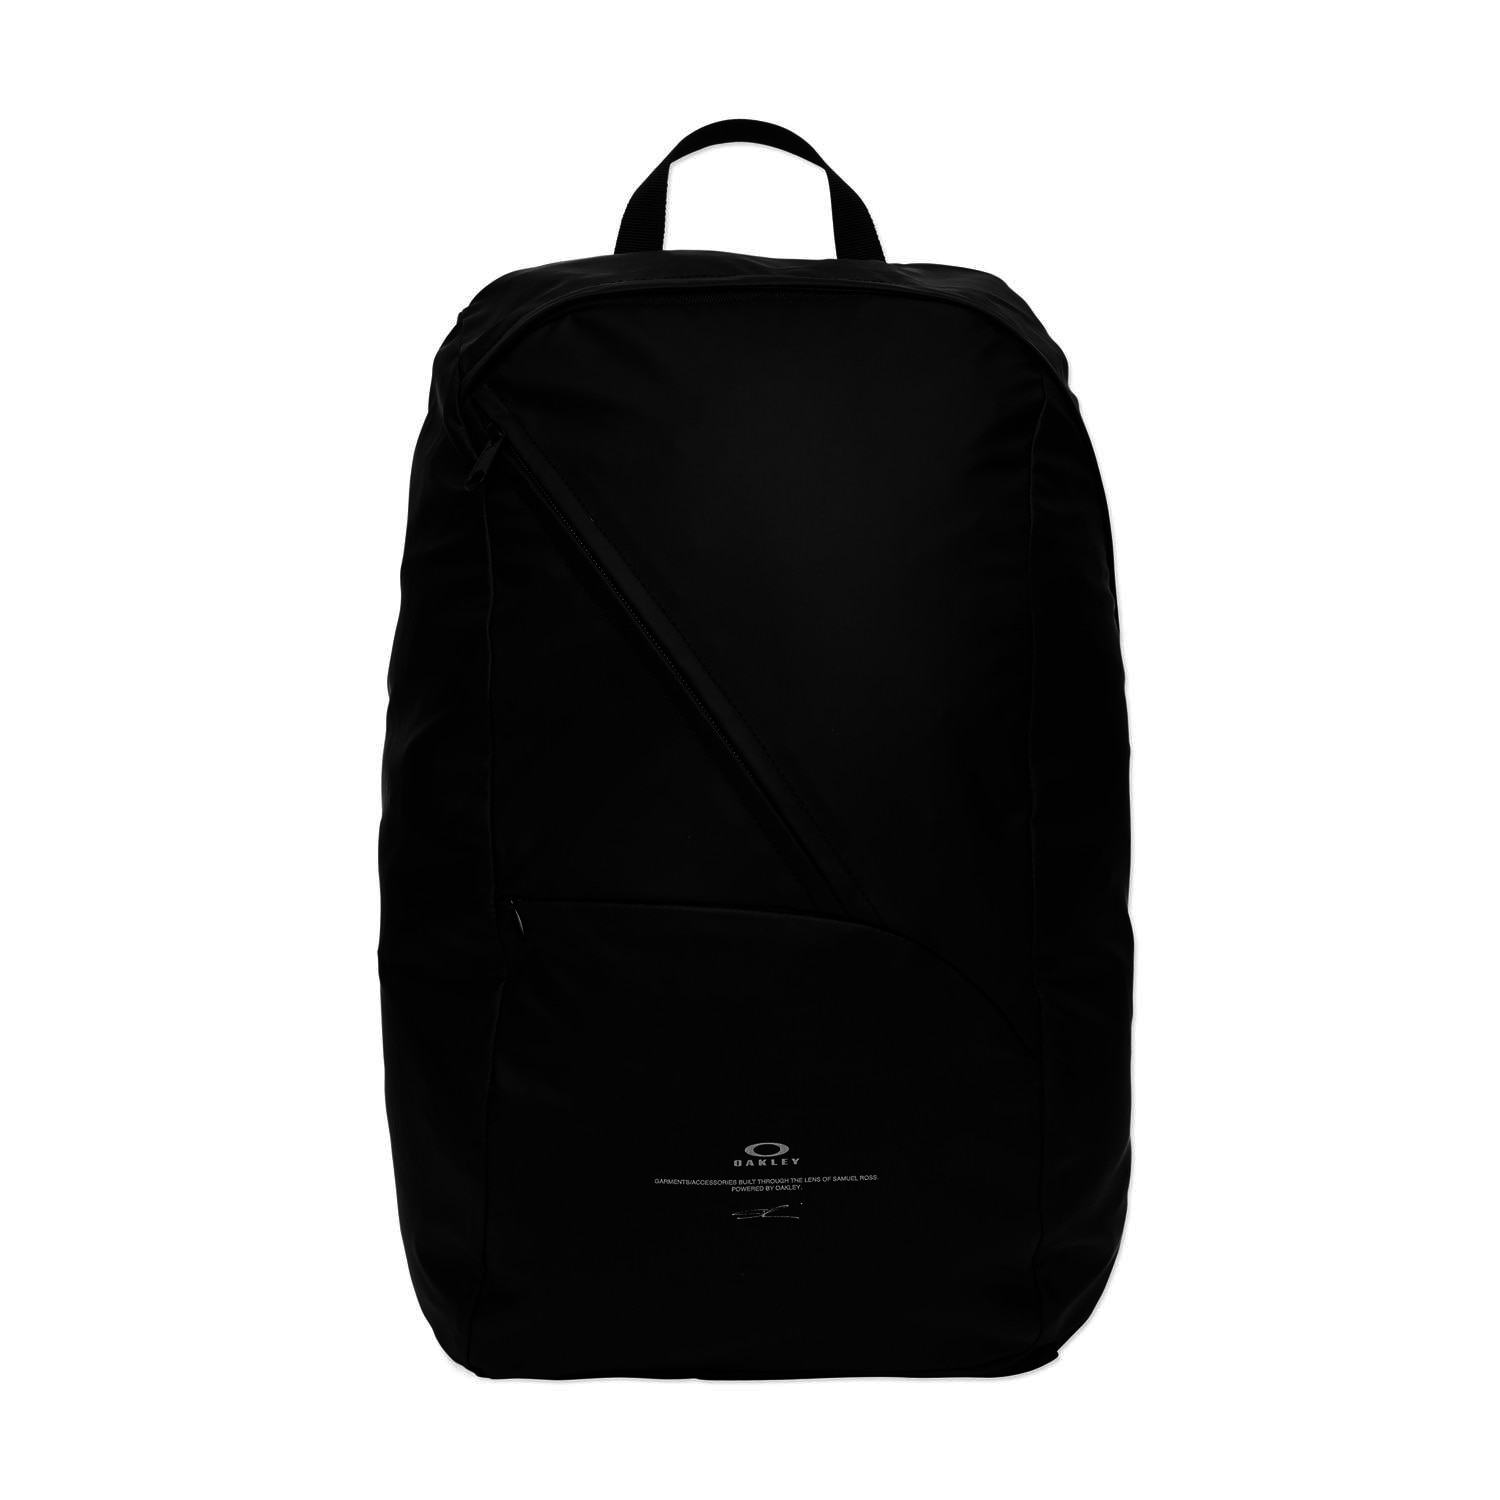 oakley packable backpack